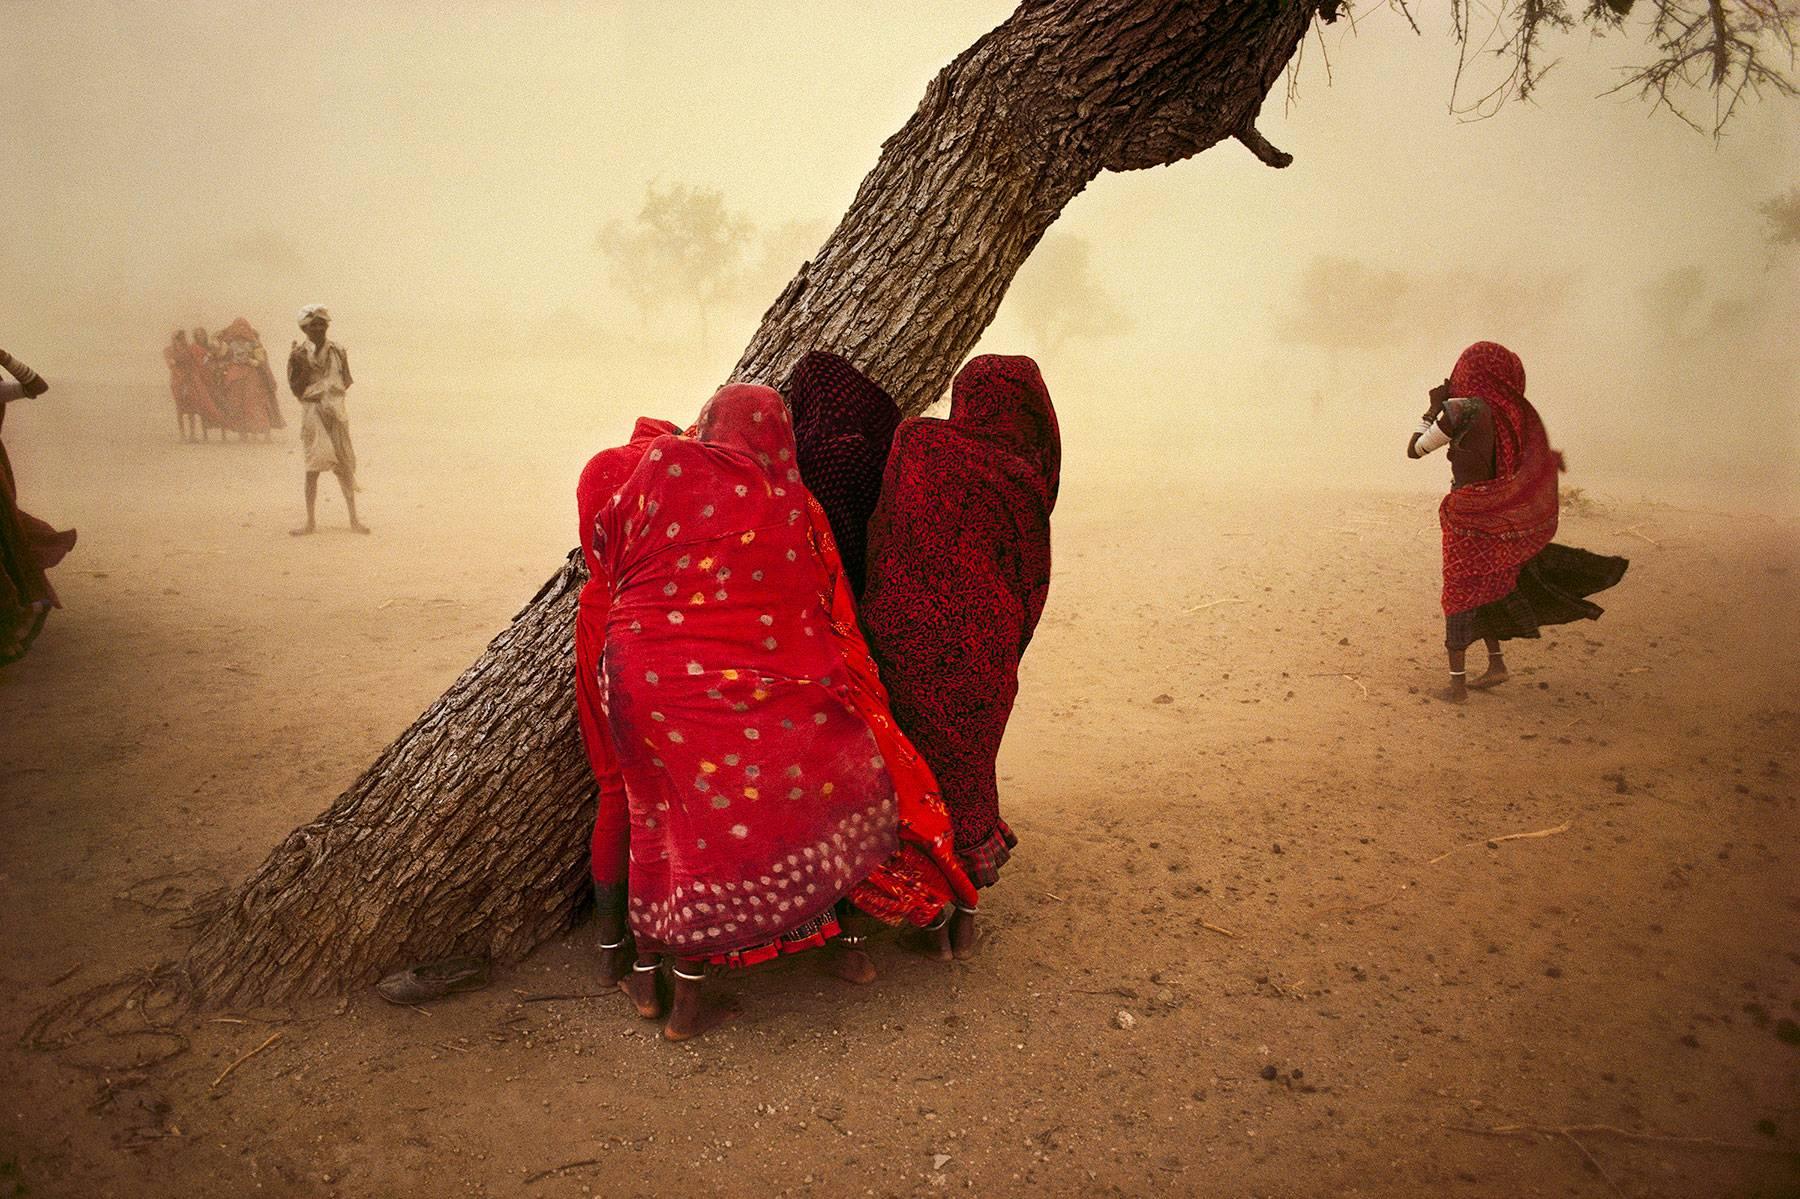 Steve McCurry Figurative Photograph - Dust Storm (Horizontal)